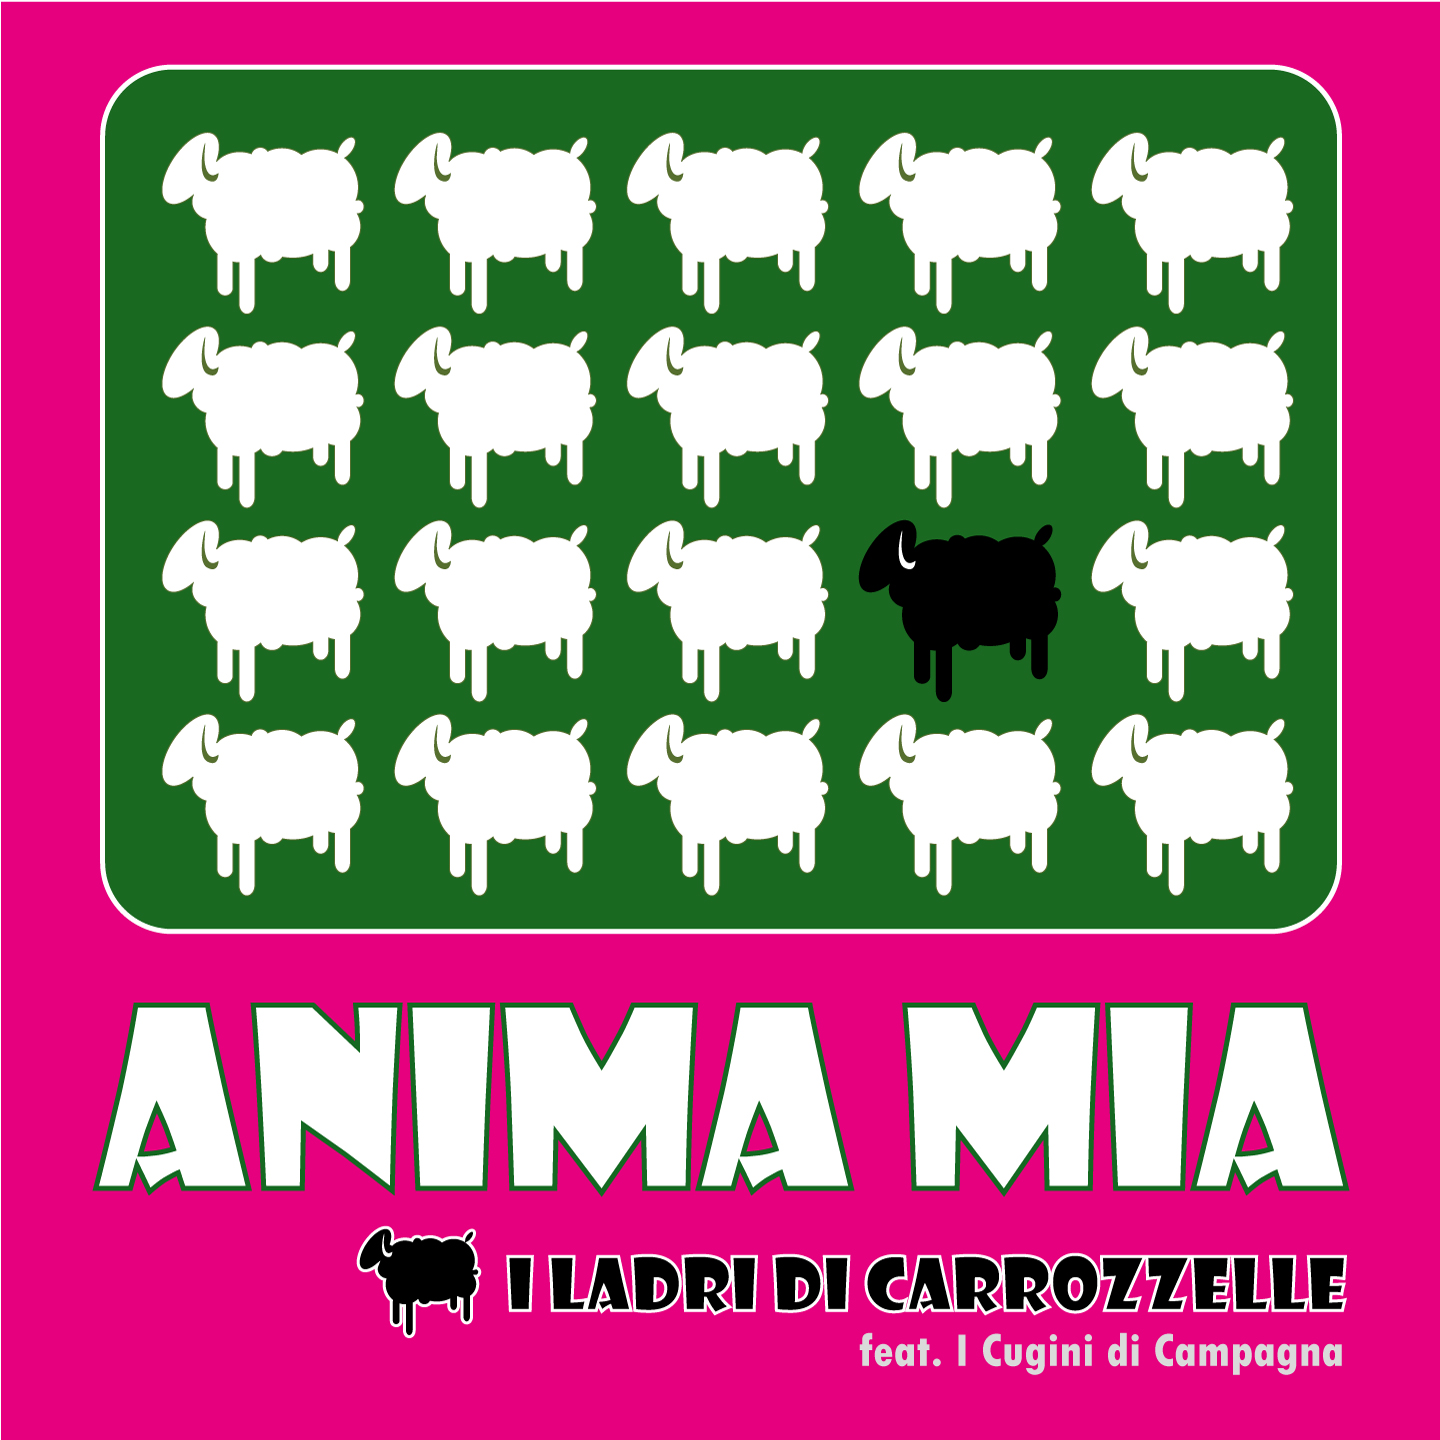 I LADRI DI CARROZZELLE feat. I Cugini di Campagna – Anima mia